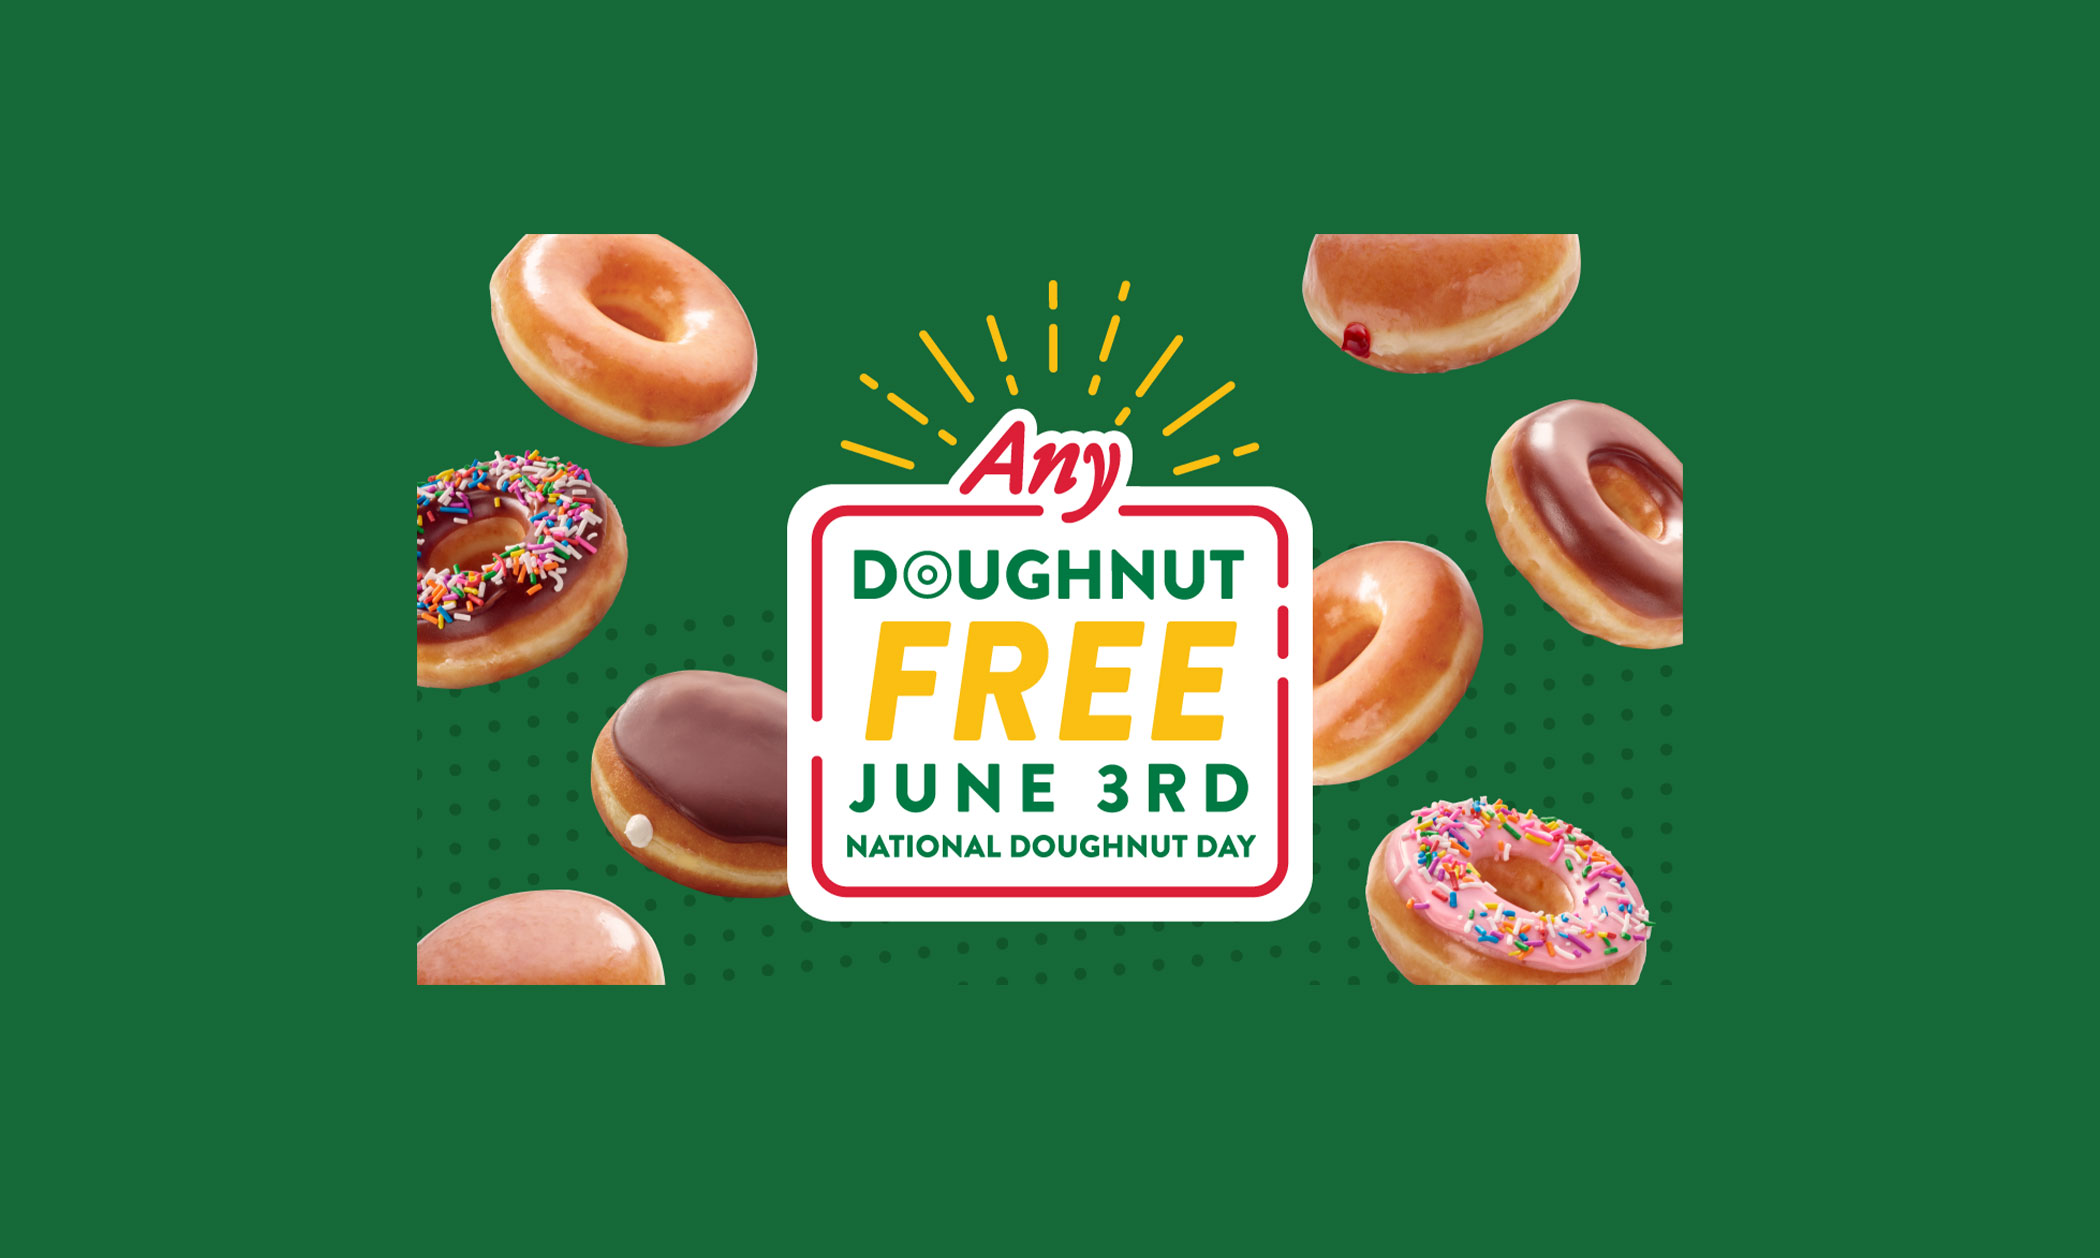 Claim Your FREE Krispy Kreme Doughnut for National Doughnut Day! The